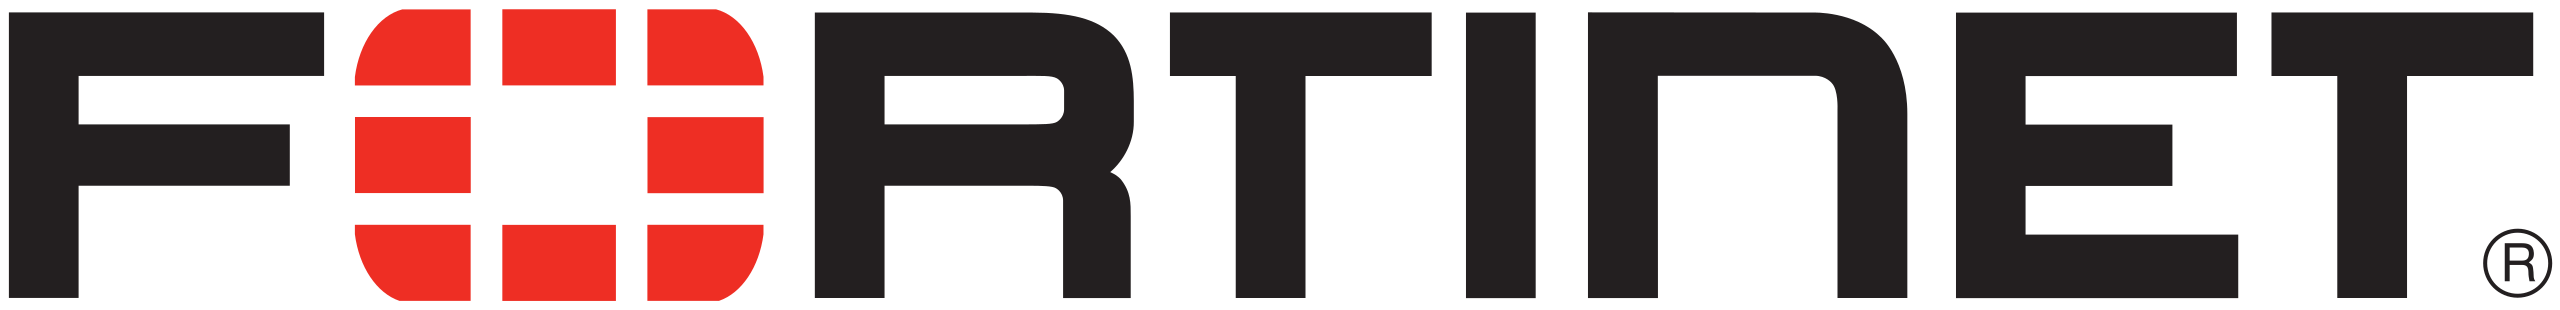 Логотип Fortinet